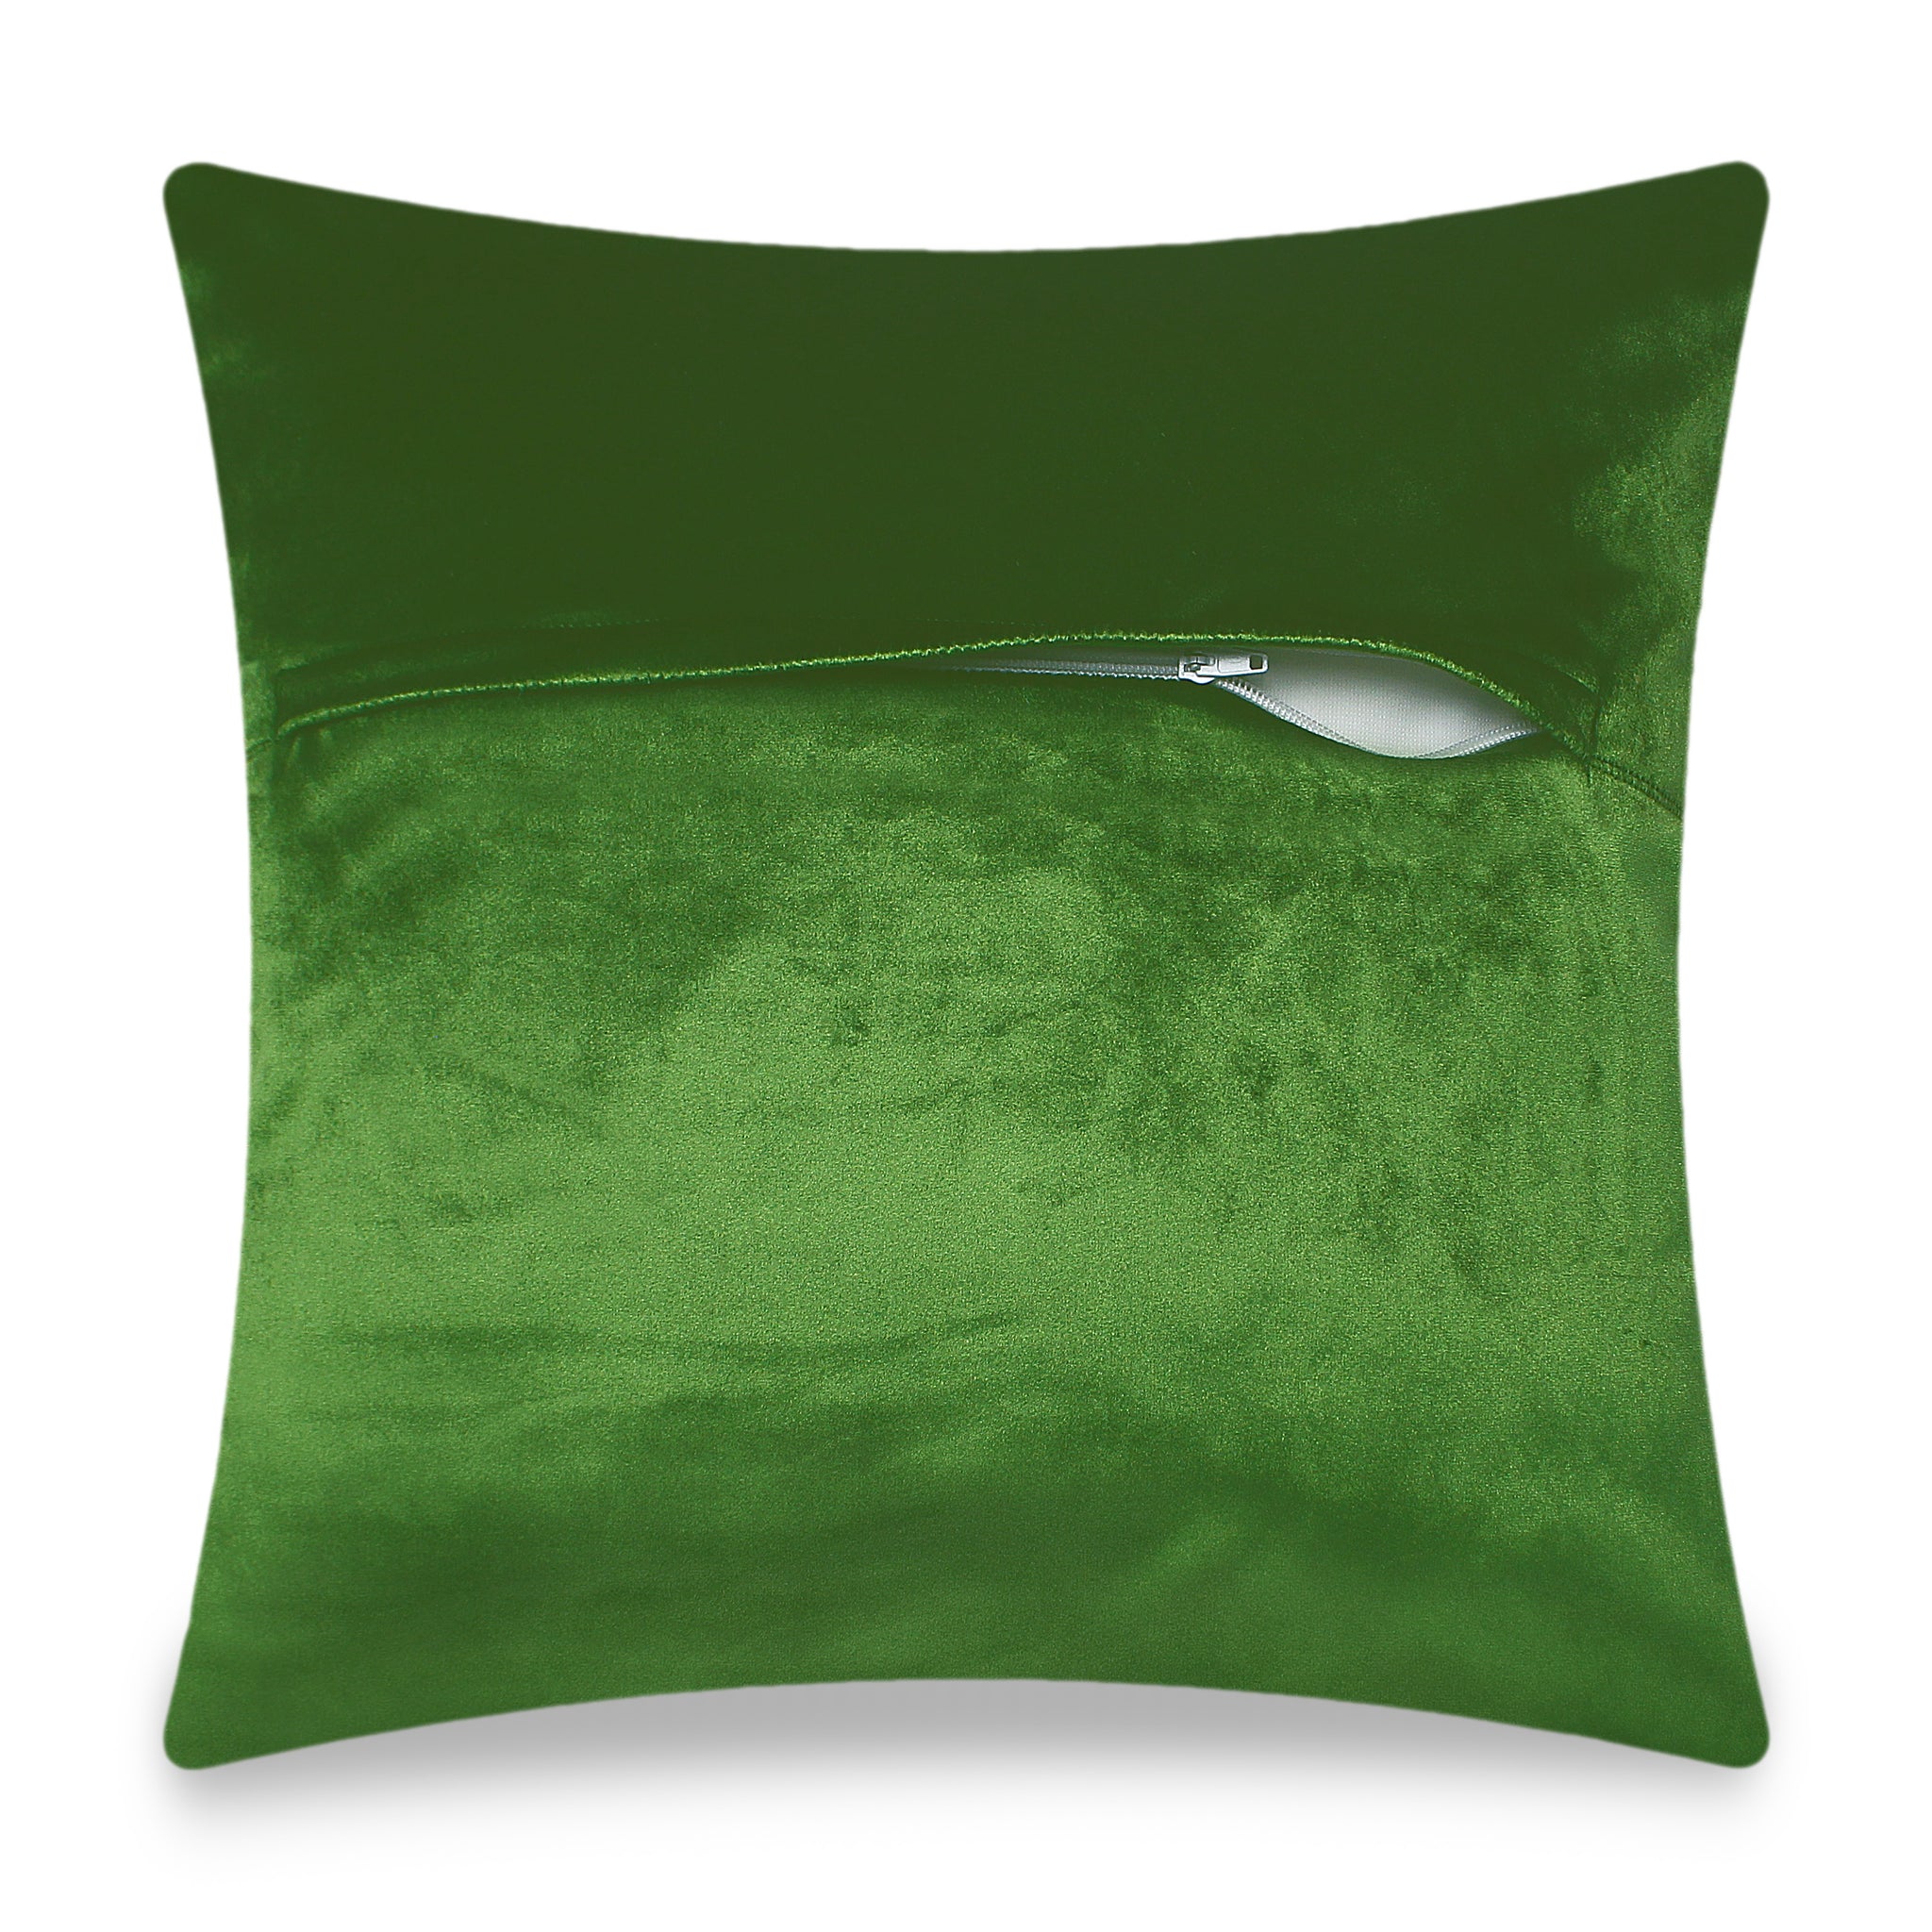  Velvet Cushion Cover Frida Kahlo and Floral Decorative Pillowcase Home Decor Throw Pillow for Sofa Chair 45x45 cm 5